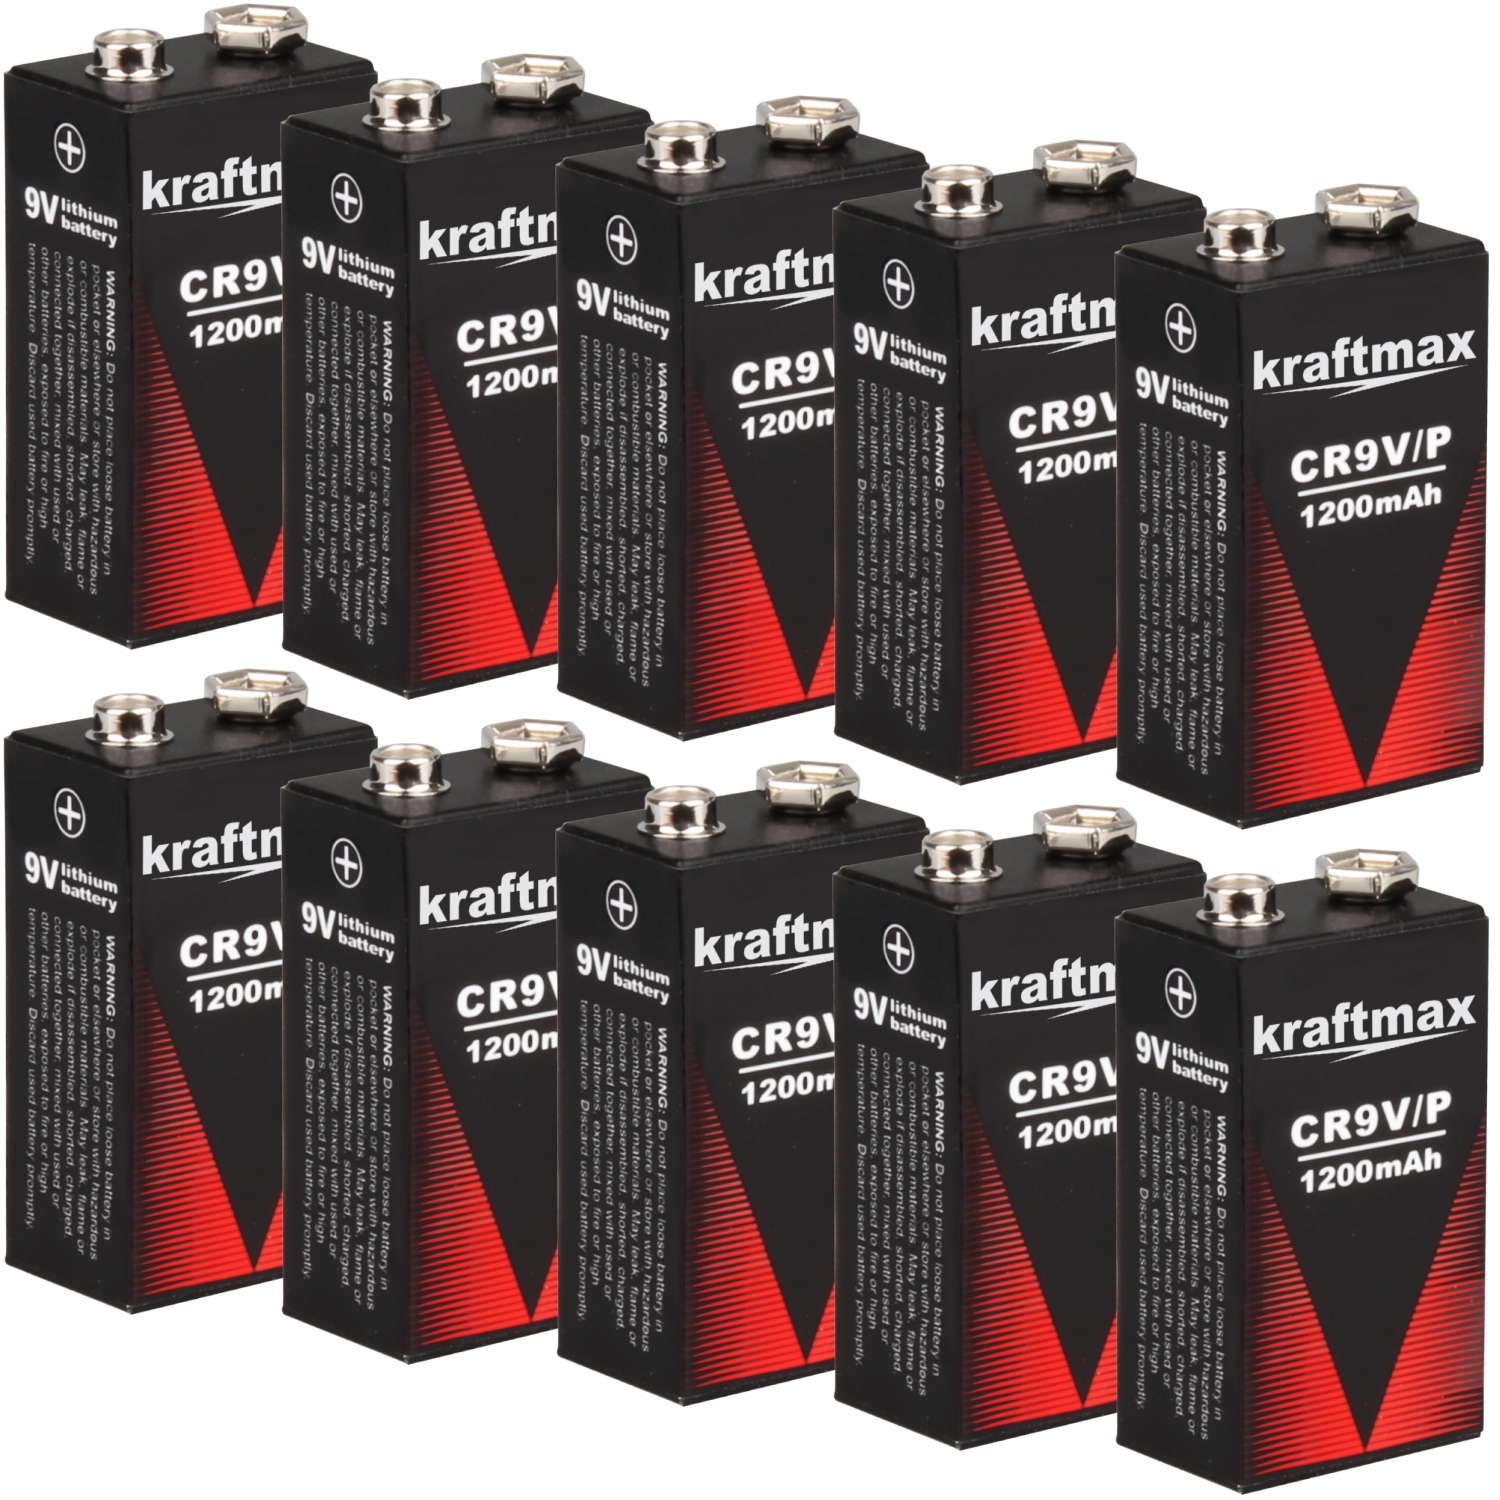 10x FDK CP-V9Ju Lihtium Batterie 3CR1/2 6L 9V Block für Rauchmelder 